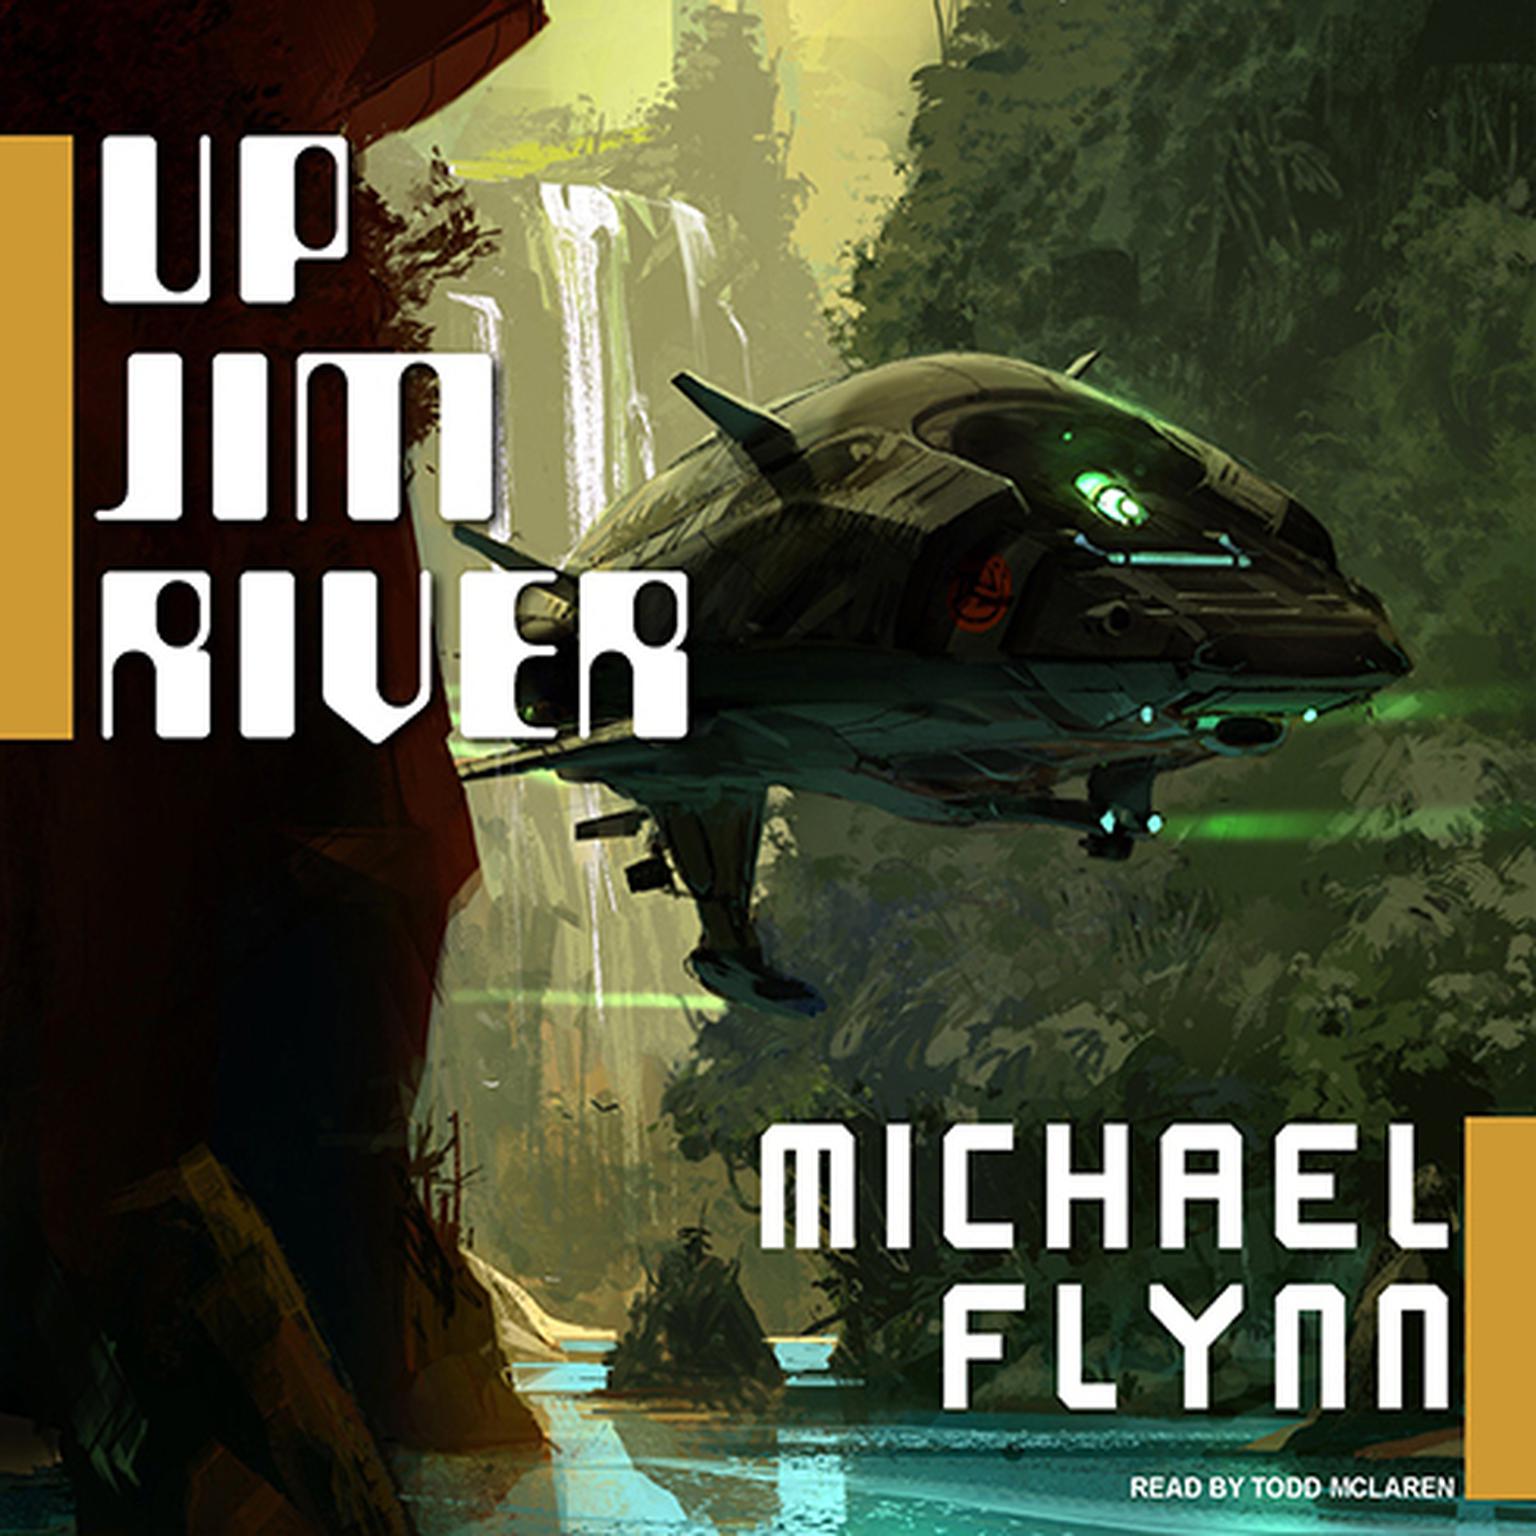 Up Jim River Audiobook, by Michael Flynn